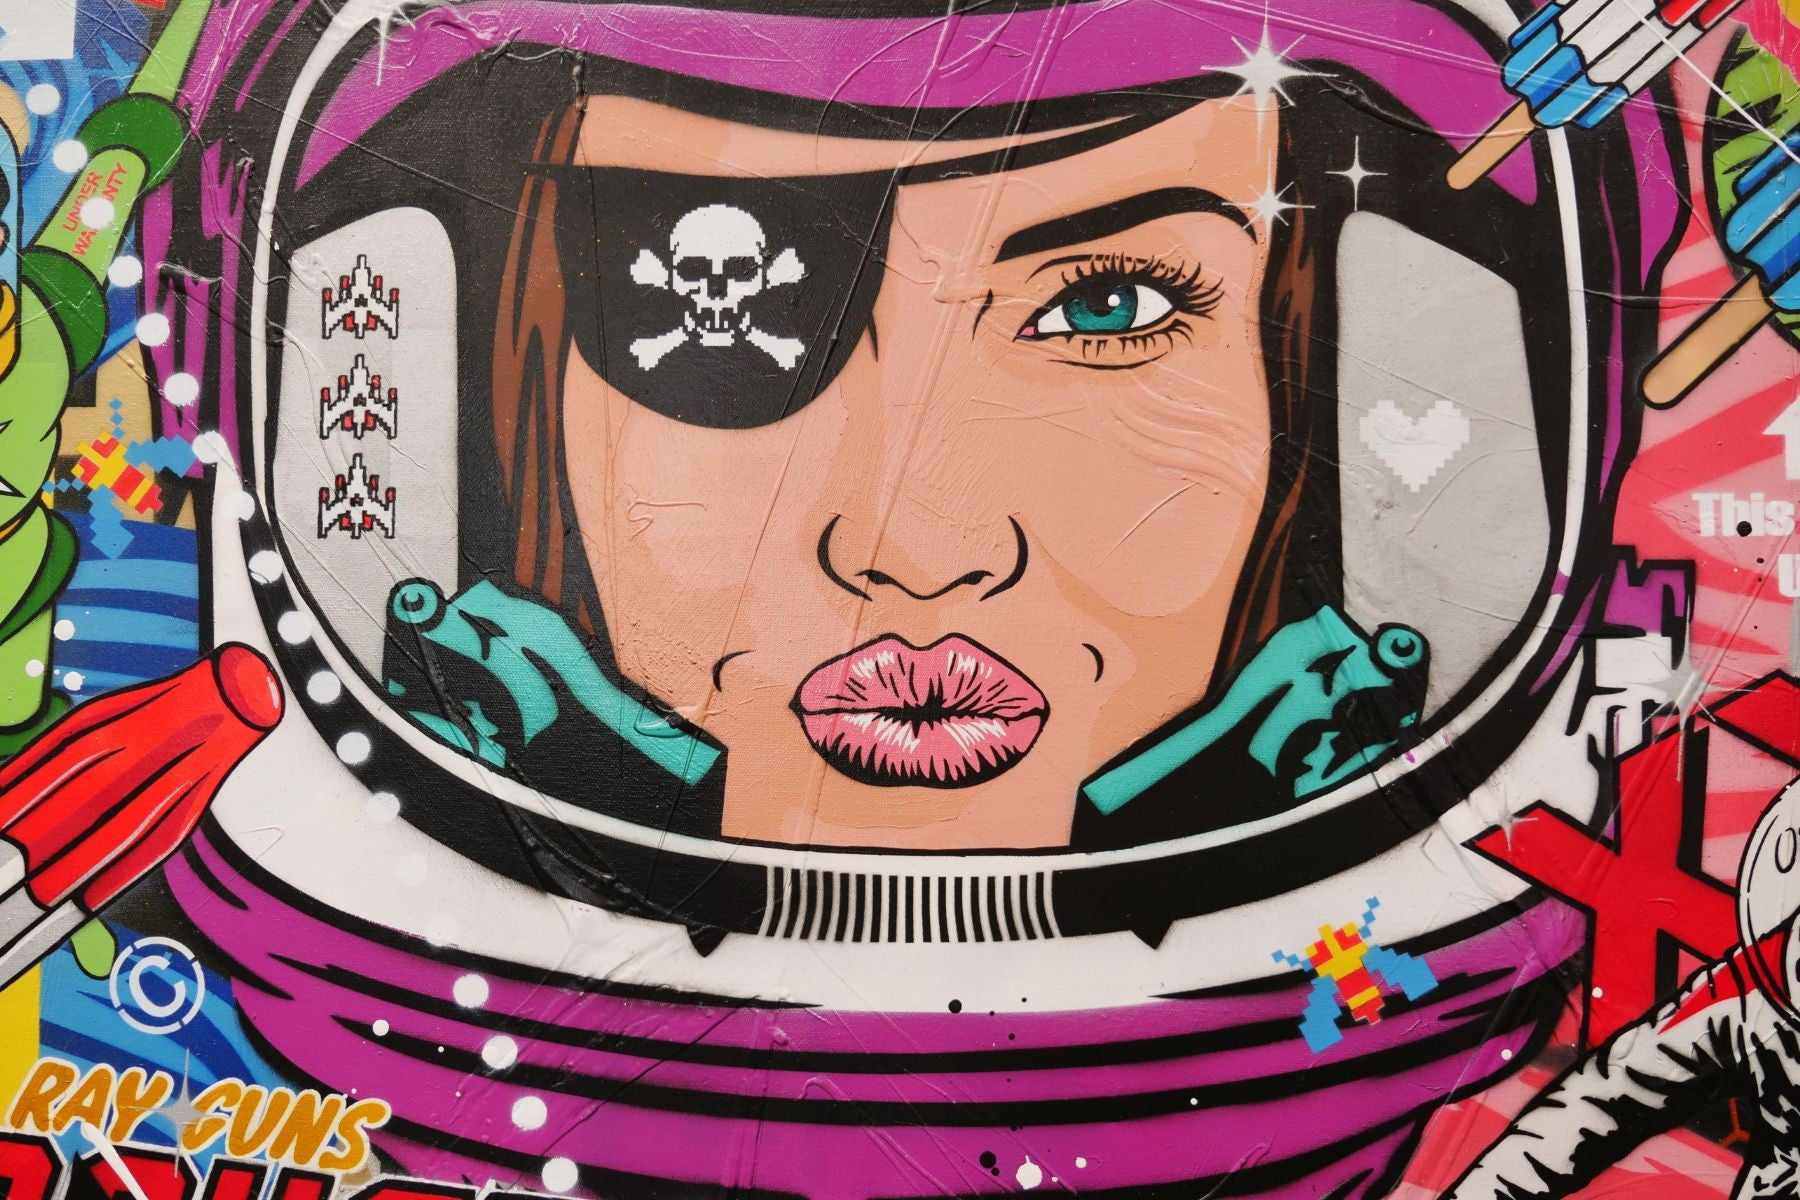 Purple Space Pirate 140cm x 100cm Space Cadet Textured Urban Pop Art Painting (SOLD)